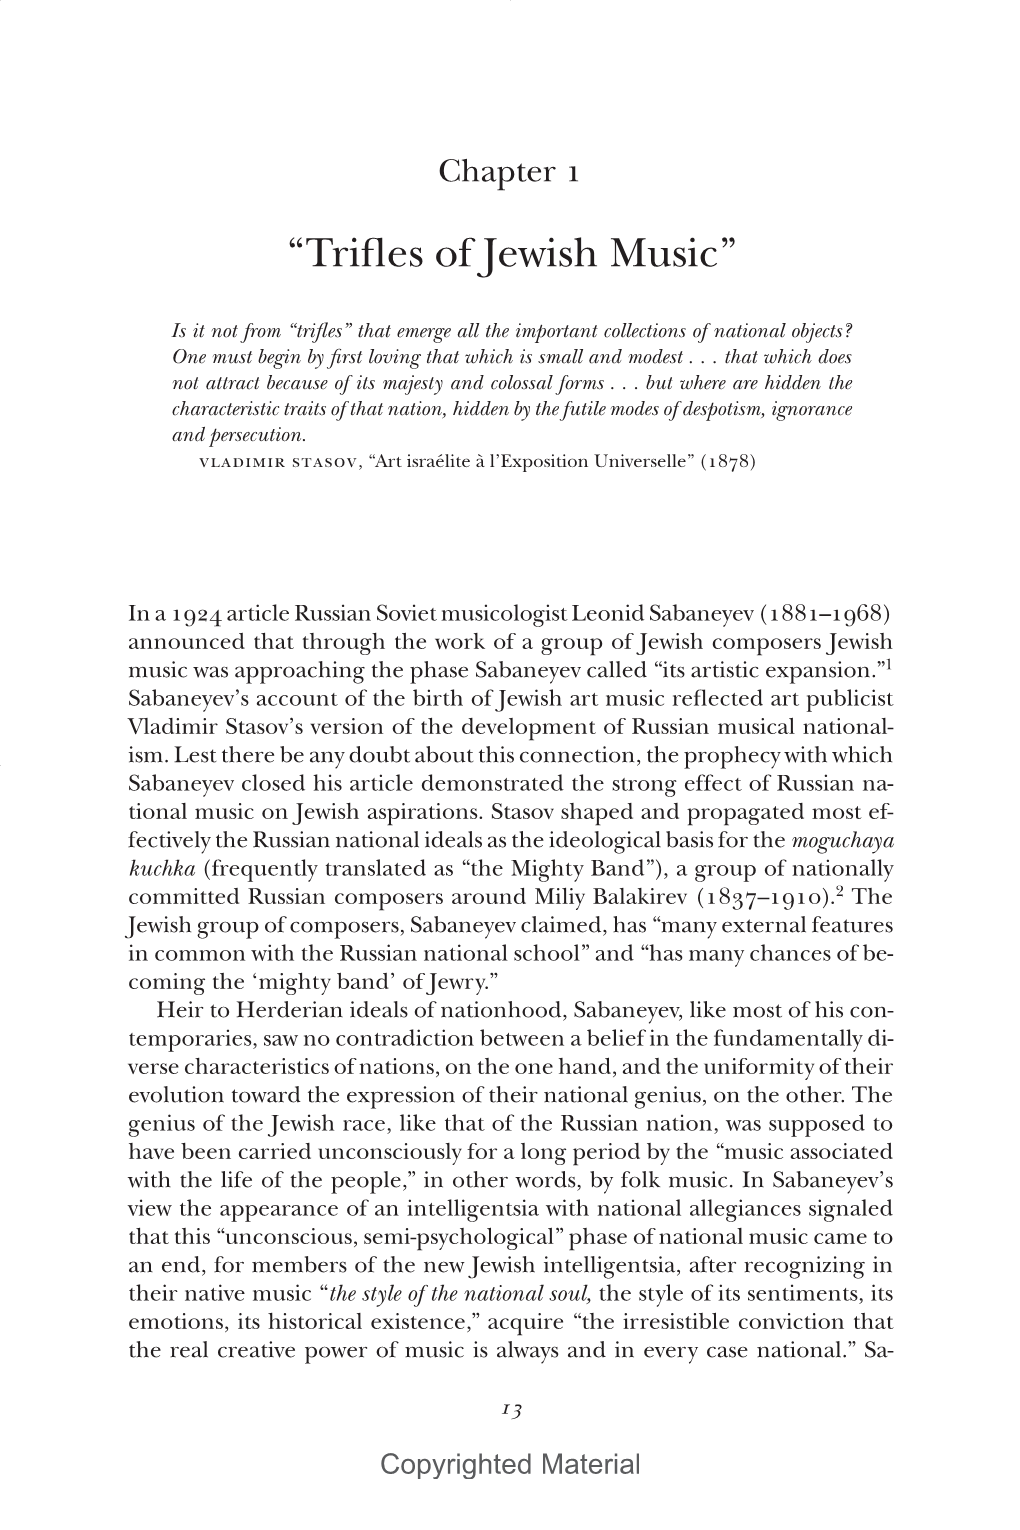 Jewish Identities 8/13/07 3:58 PM Page 13